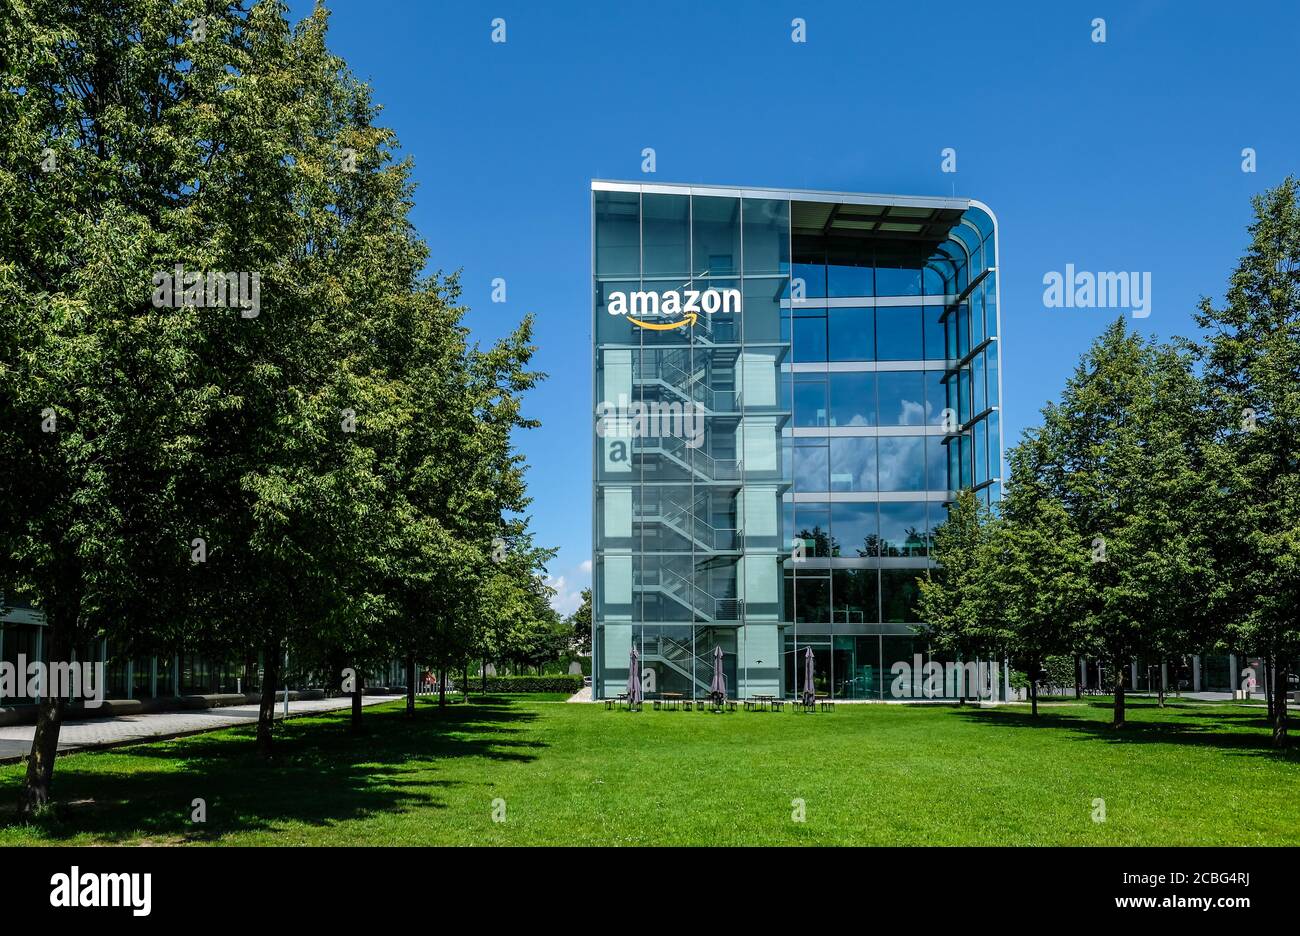 Amazon headquarter building in Munich Germany Stock Photo